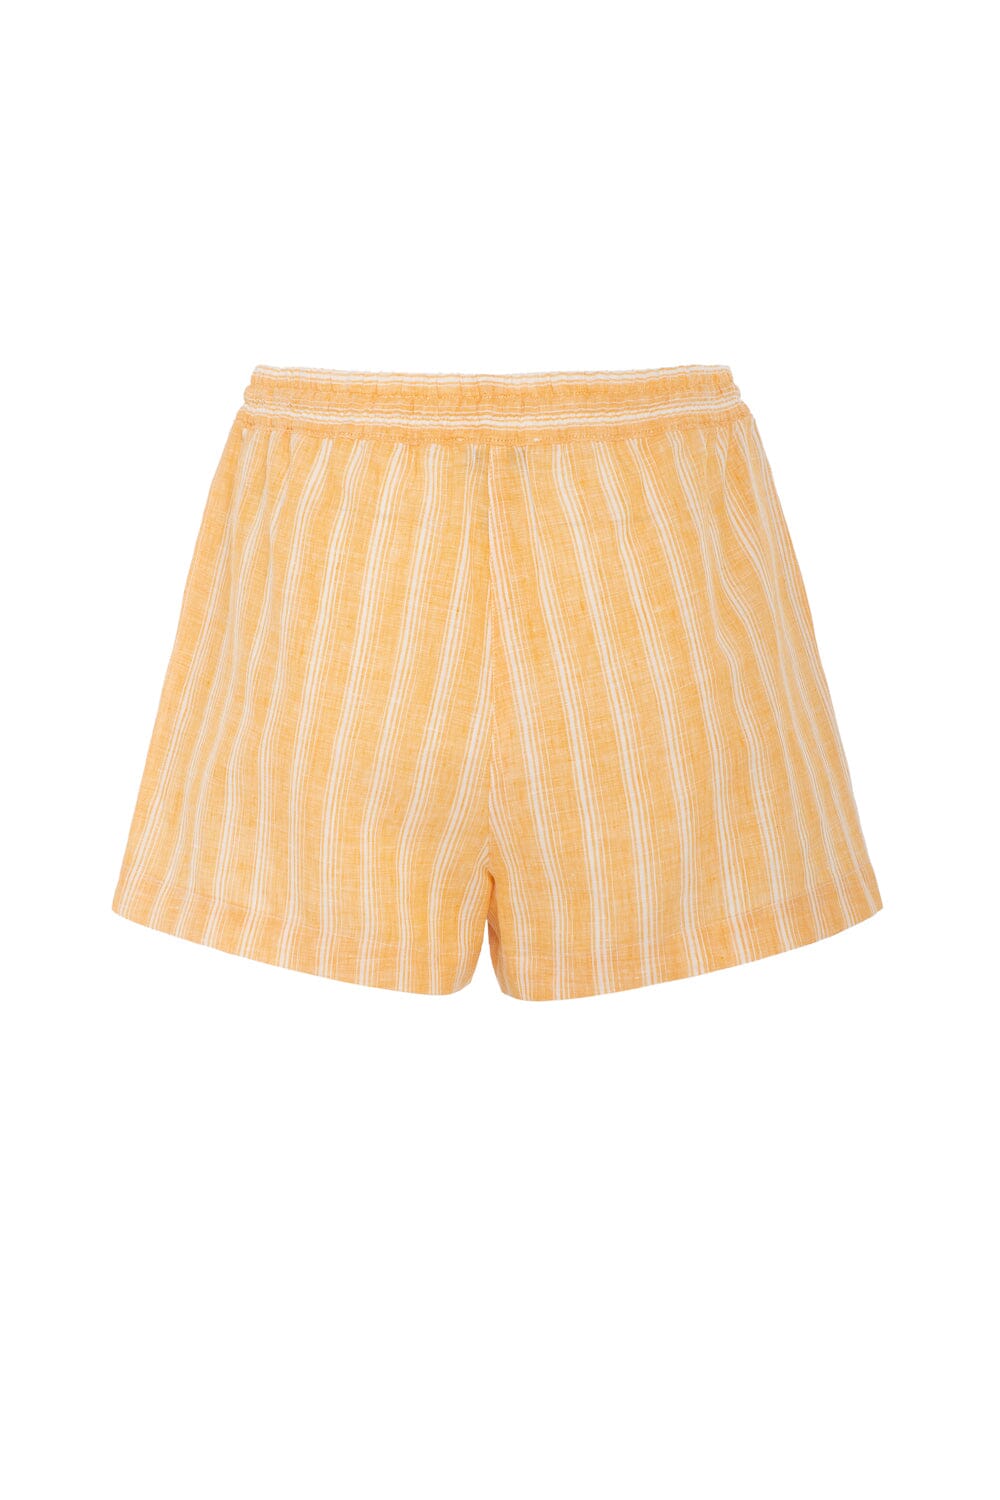 ArnieSays: Beau Linen Retro Yellow Stripe Bukse